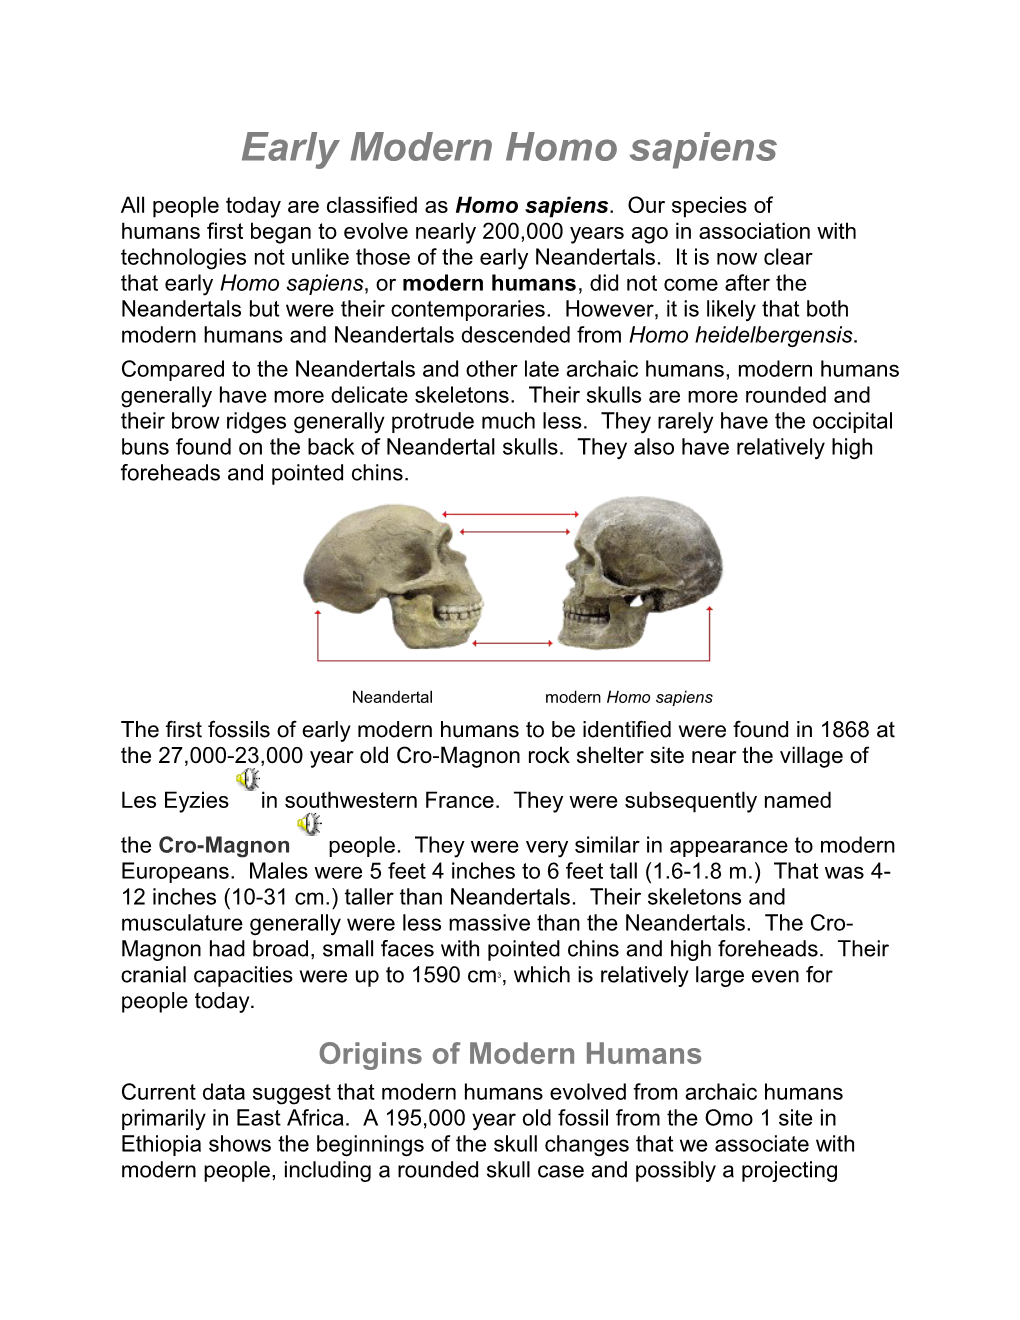 Early Modern Homo Sapiens